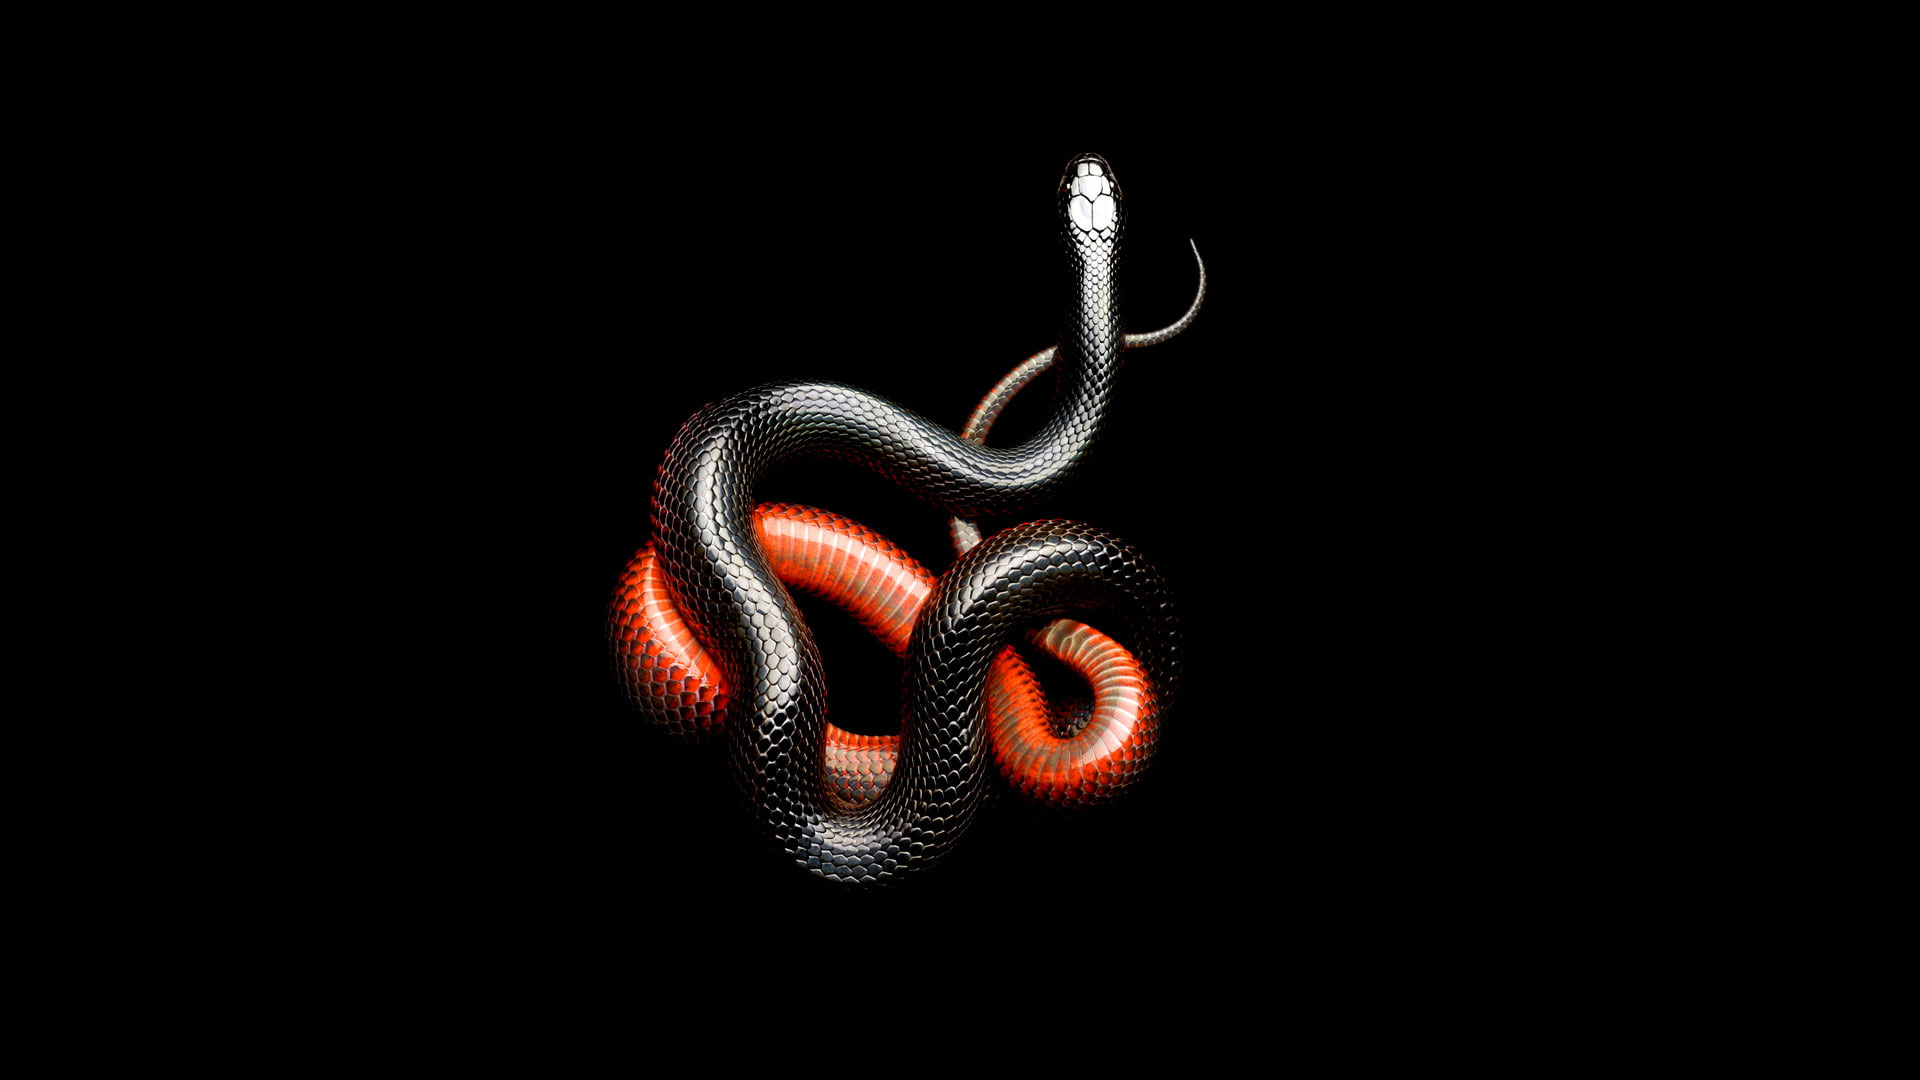 Red and black snakes wallpaper, dark • Wallpaper For You HD Wallpaper For Desktop & Mobile